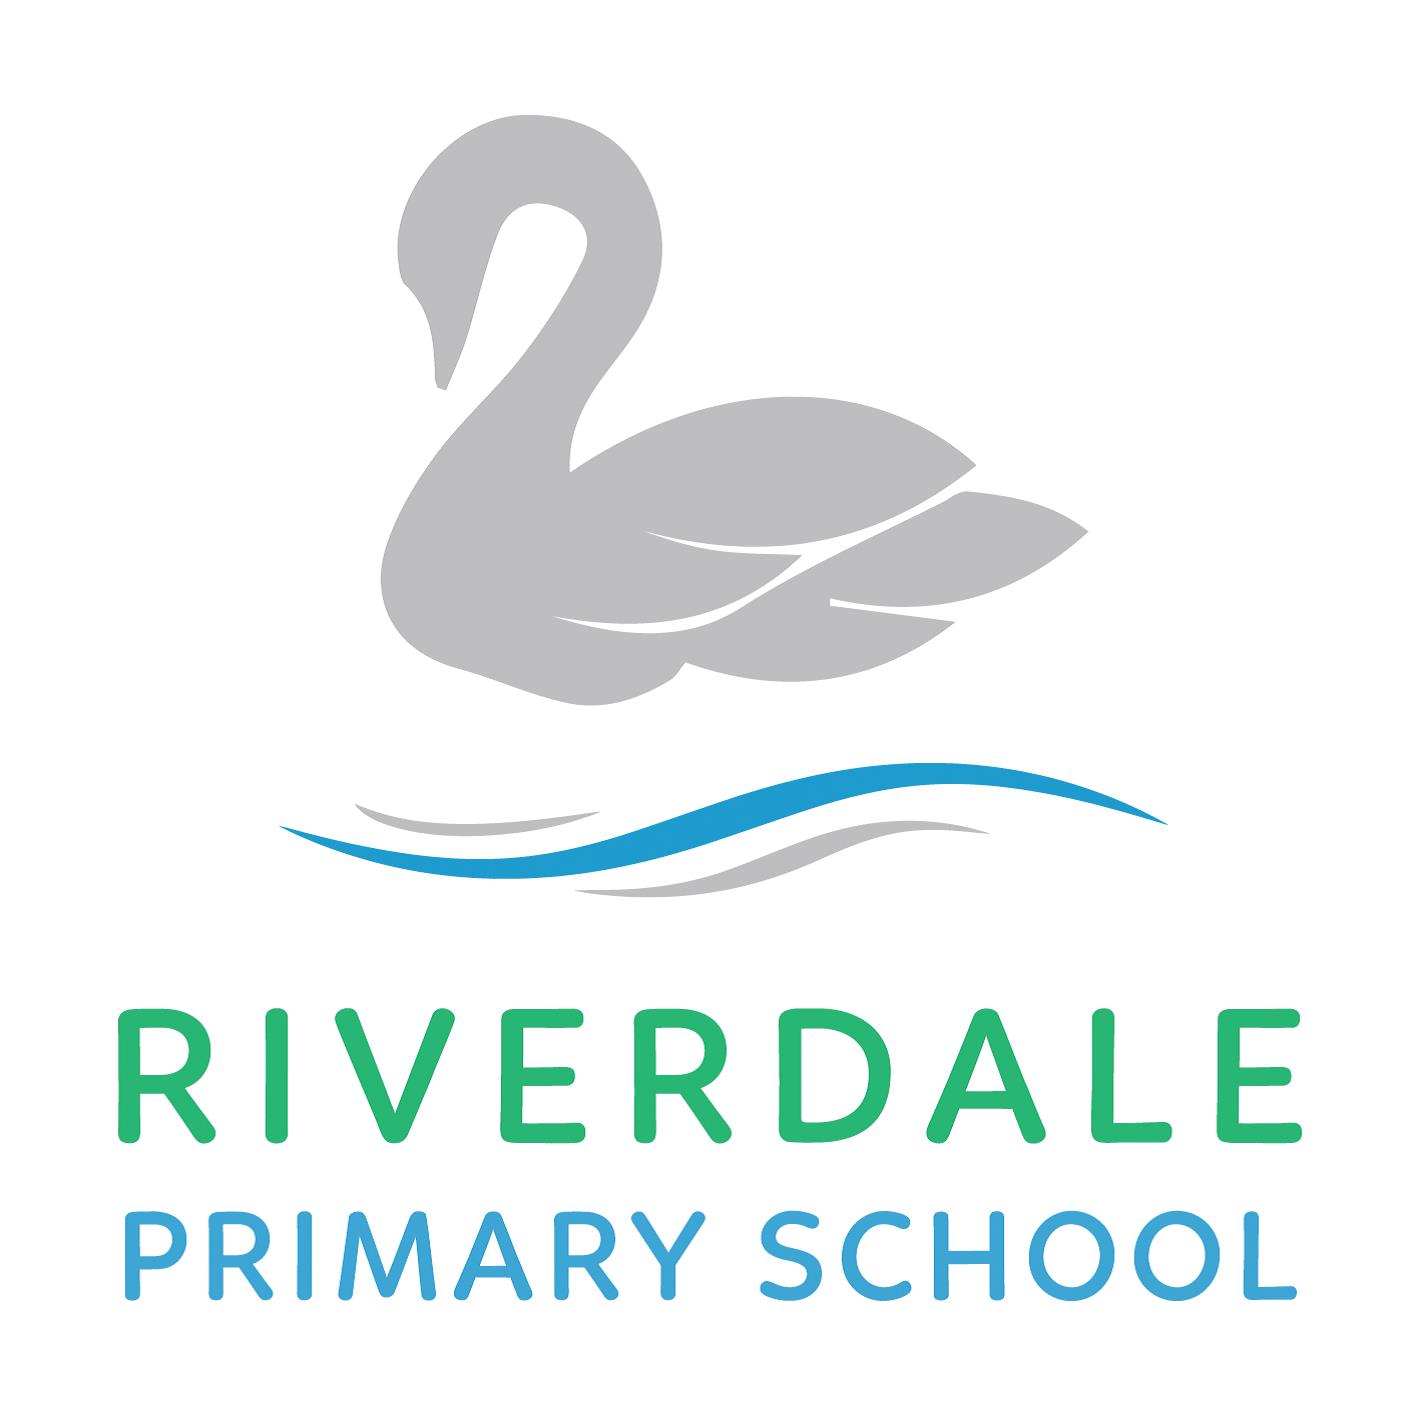 Riverdale Primary School